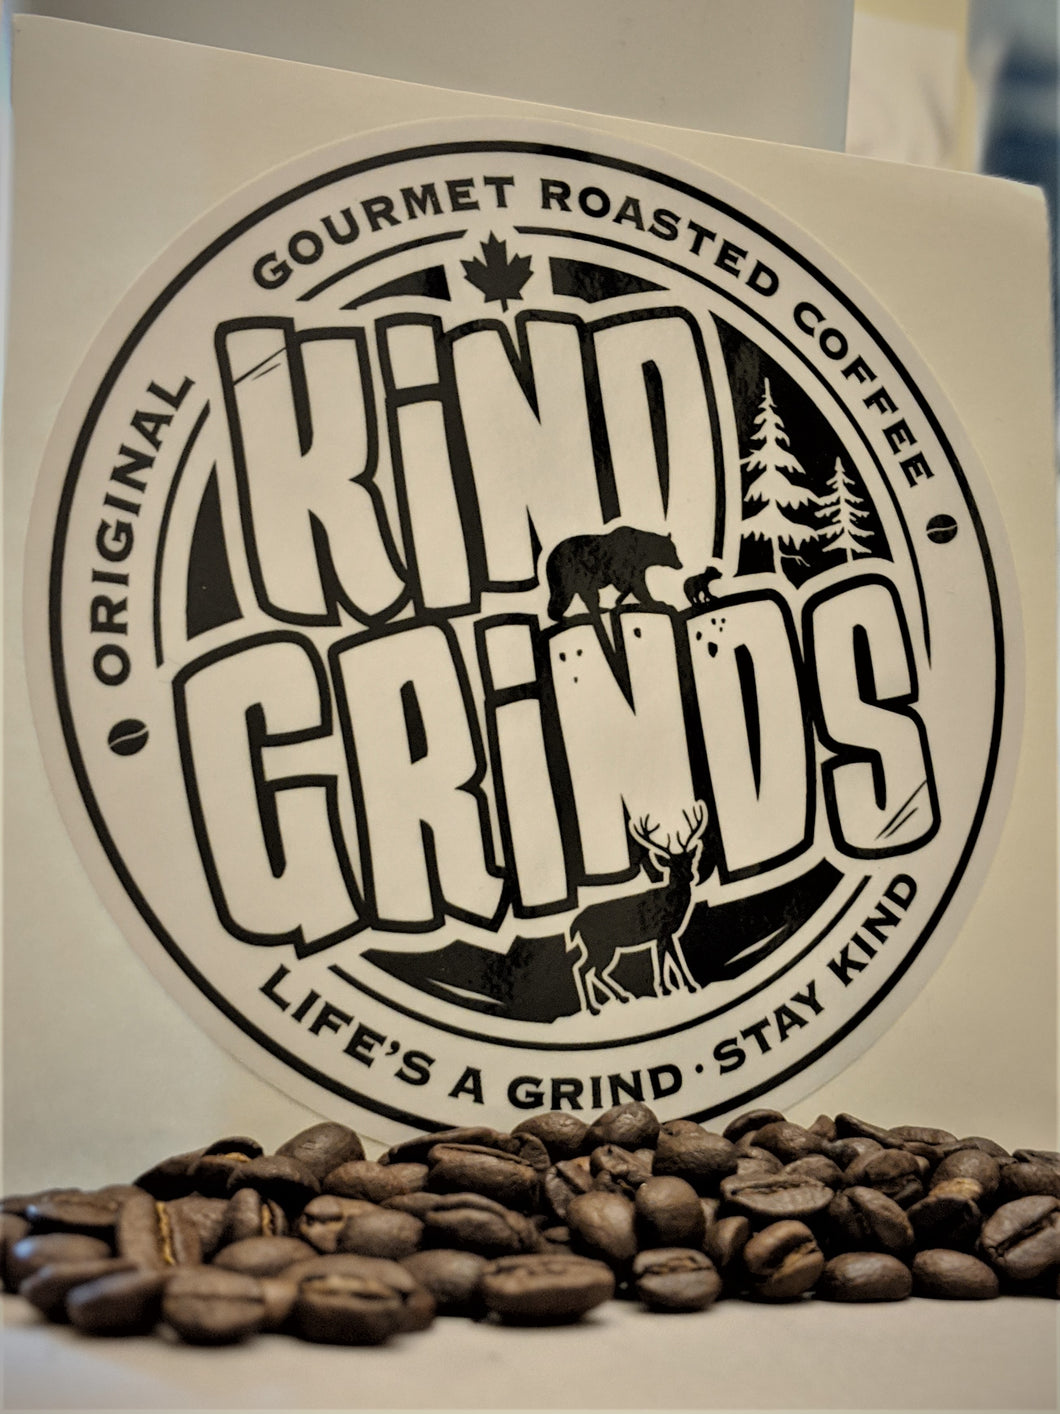 Kind Grinds Roasted Coffee Sticker